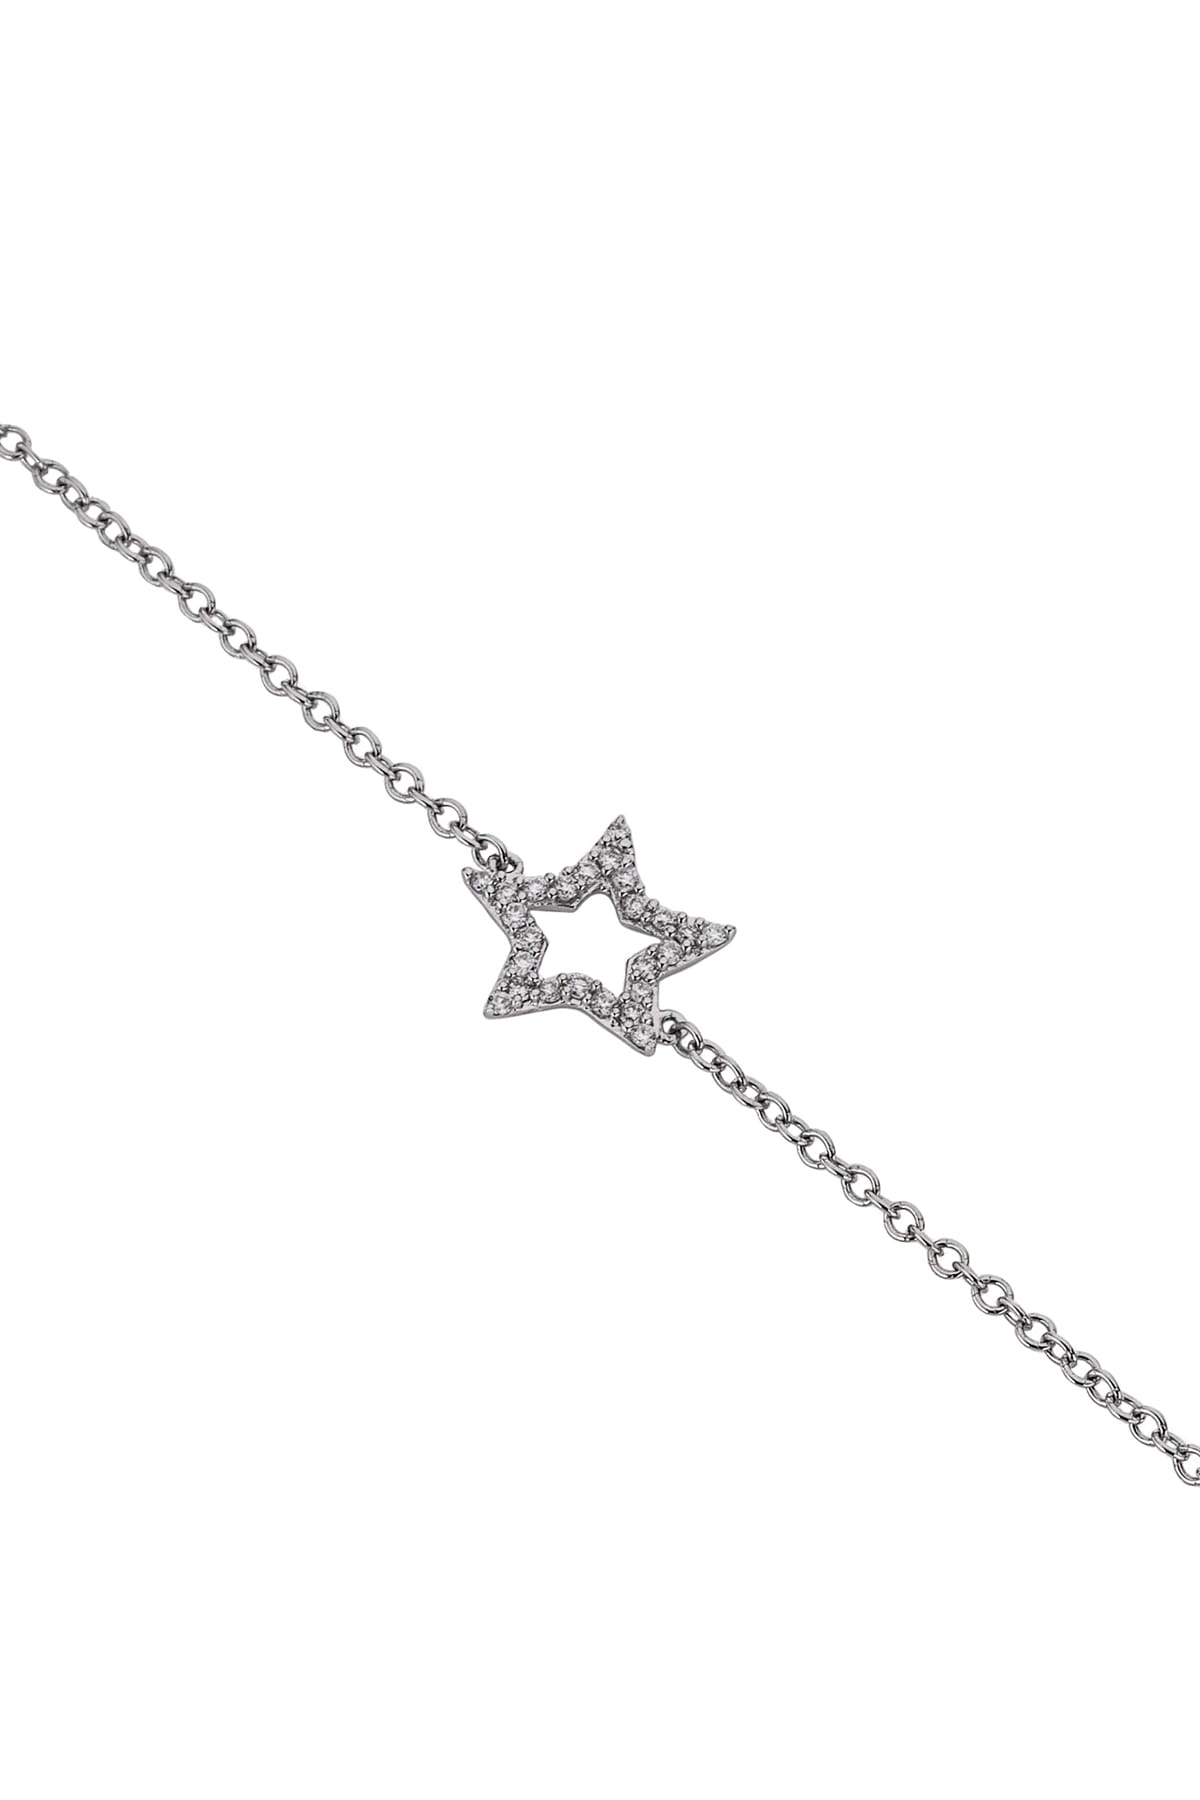 9 Carat Gold Diamond Set Star Bracelet available at LeGassick Diamonds and Jewellery Gold Coast, Australia.